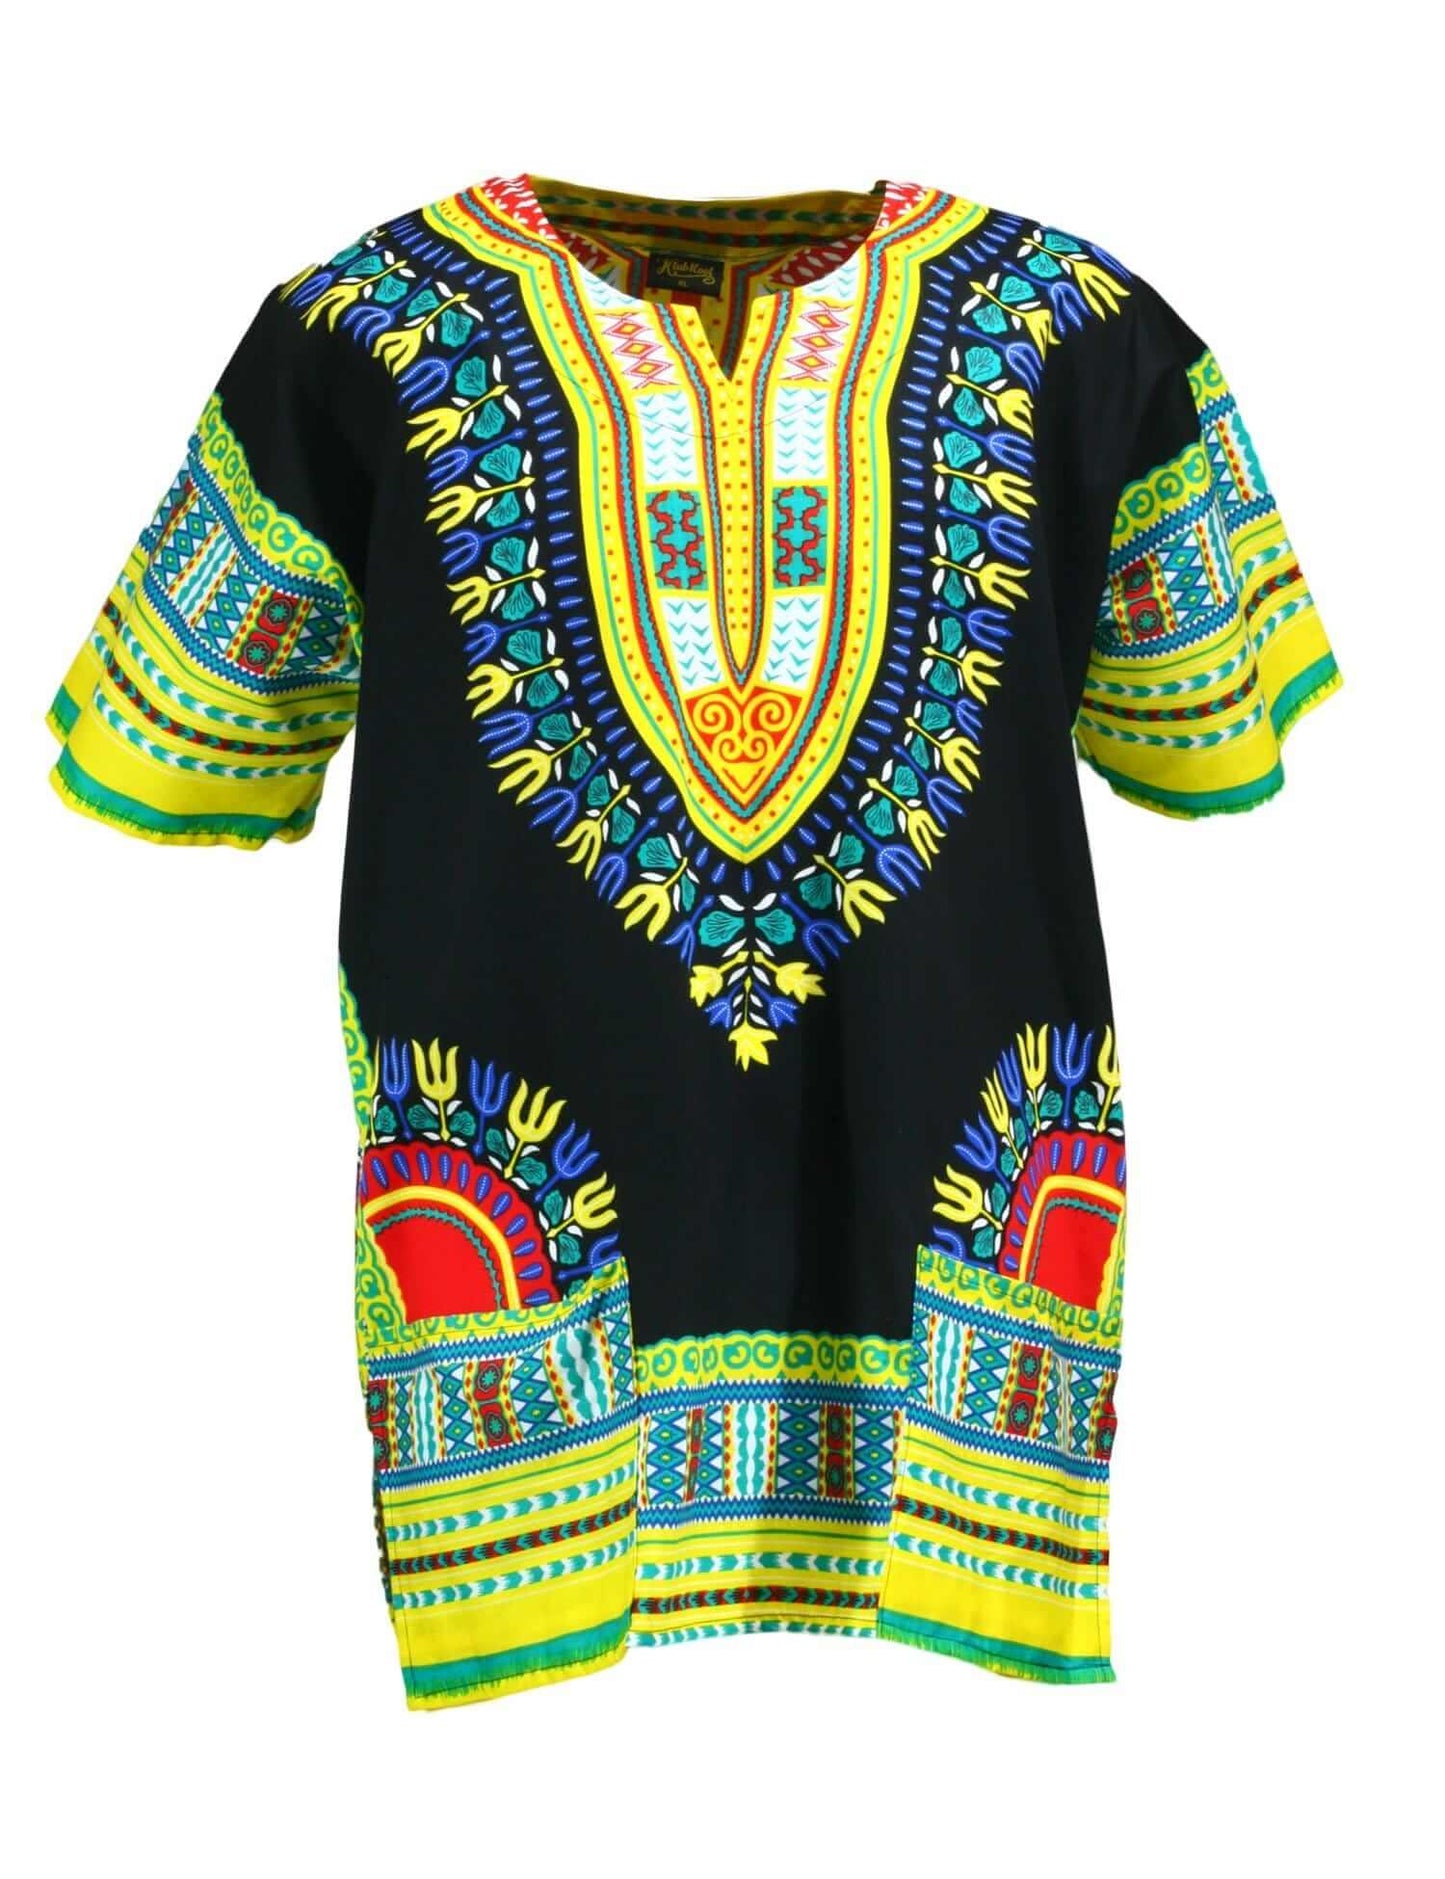 Free Size Dashiki Unisex African Shirt